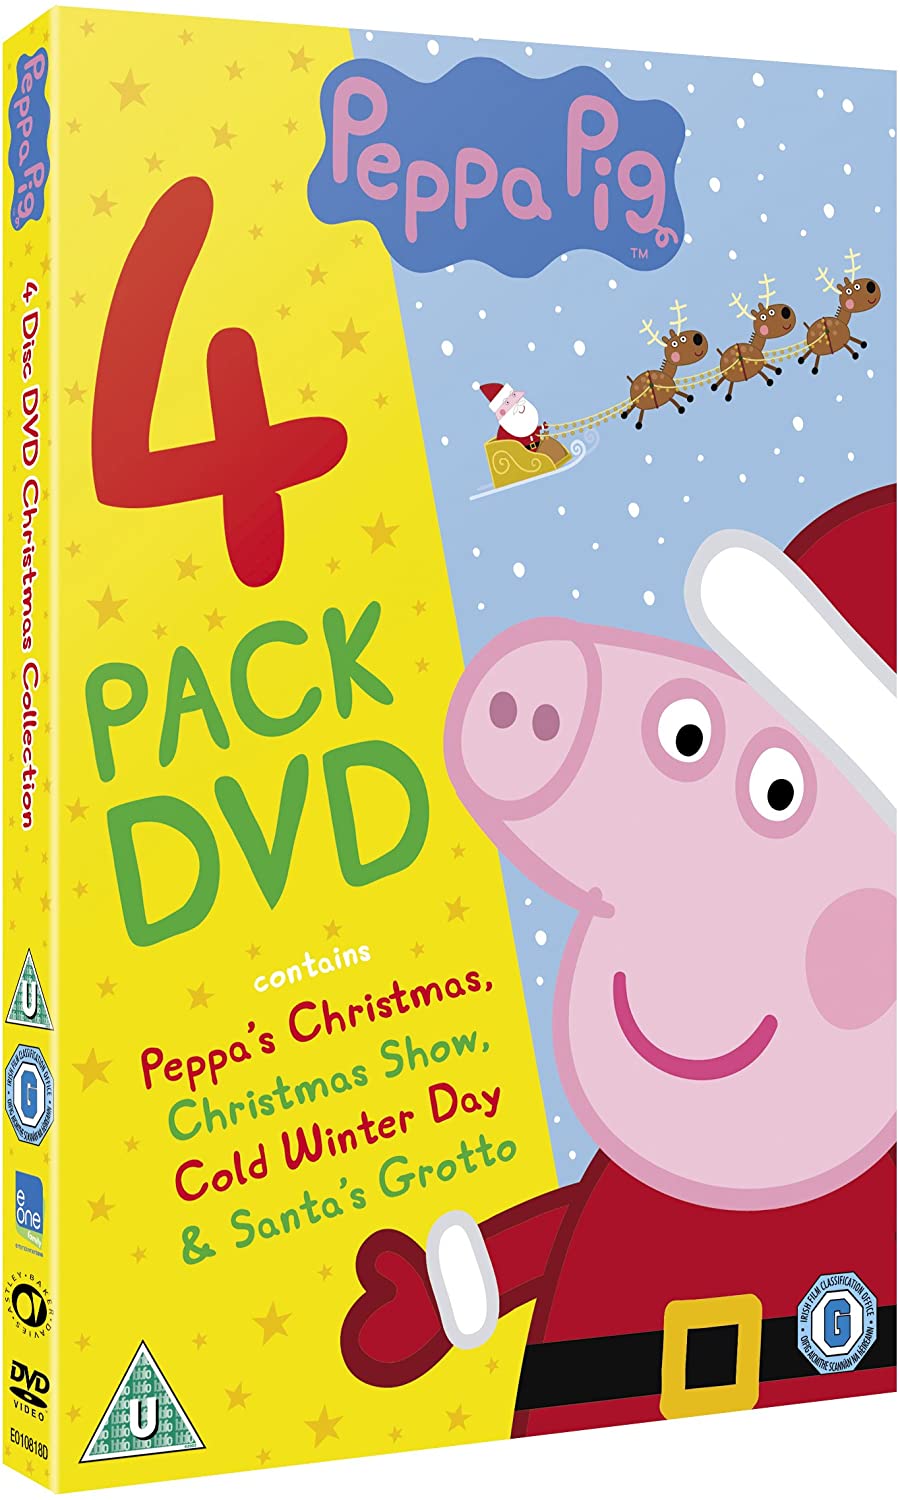 Peppa Pig: The Christmas Collection - Animation [DVD]